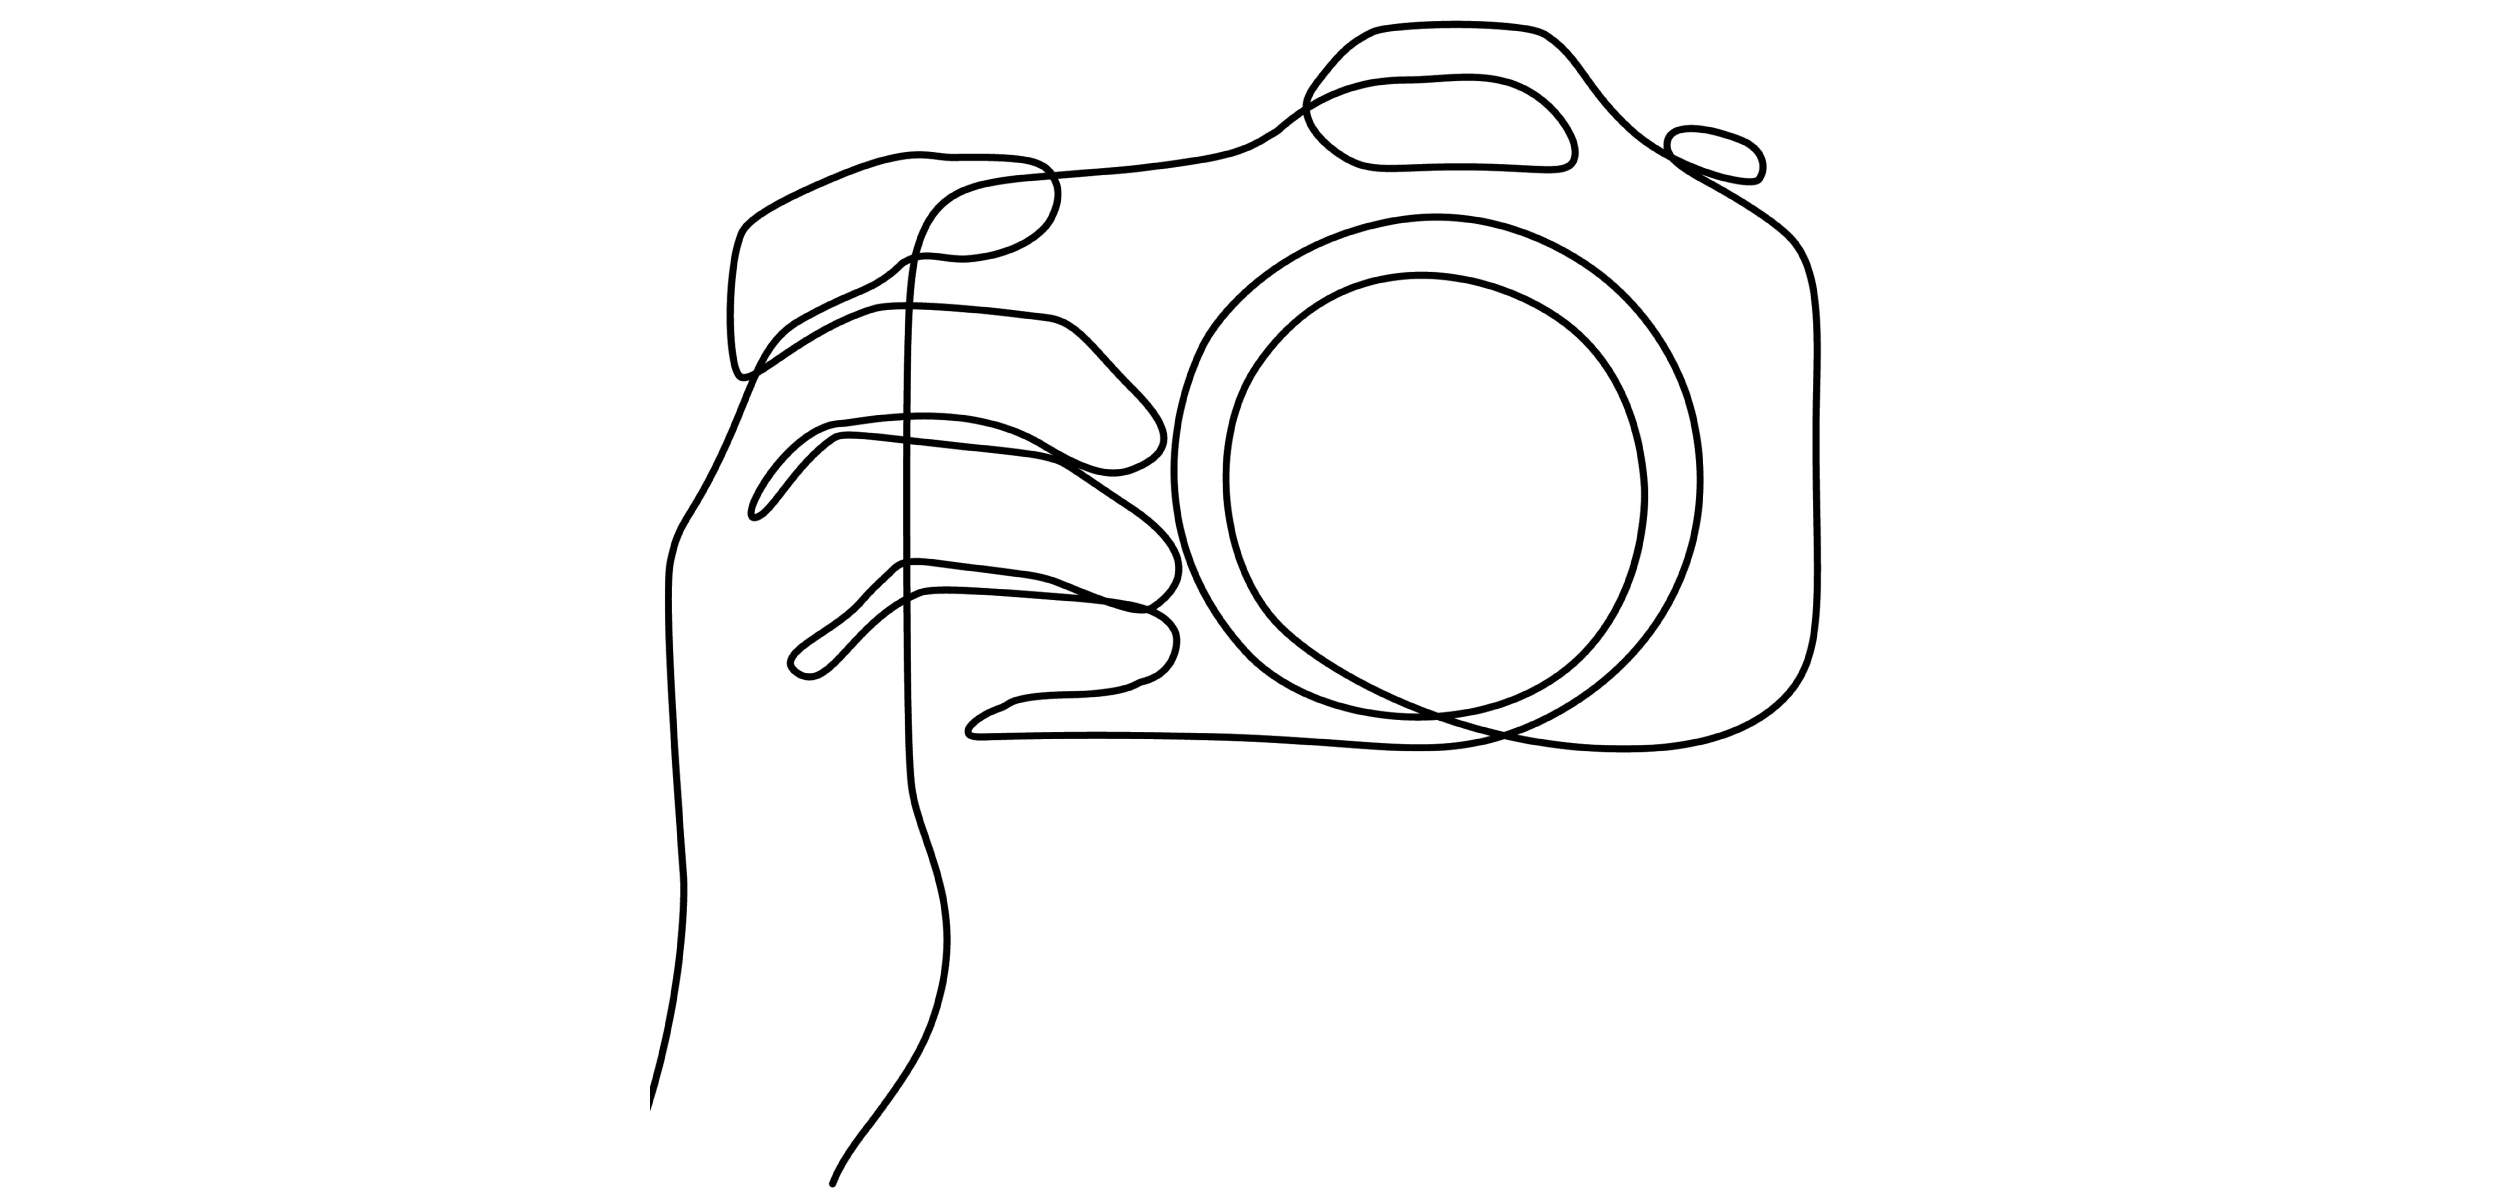 Sketch of a camera.